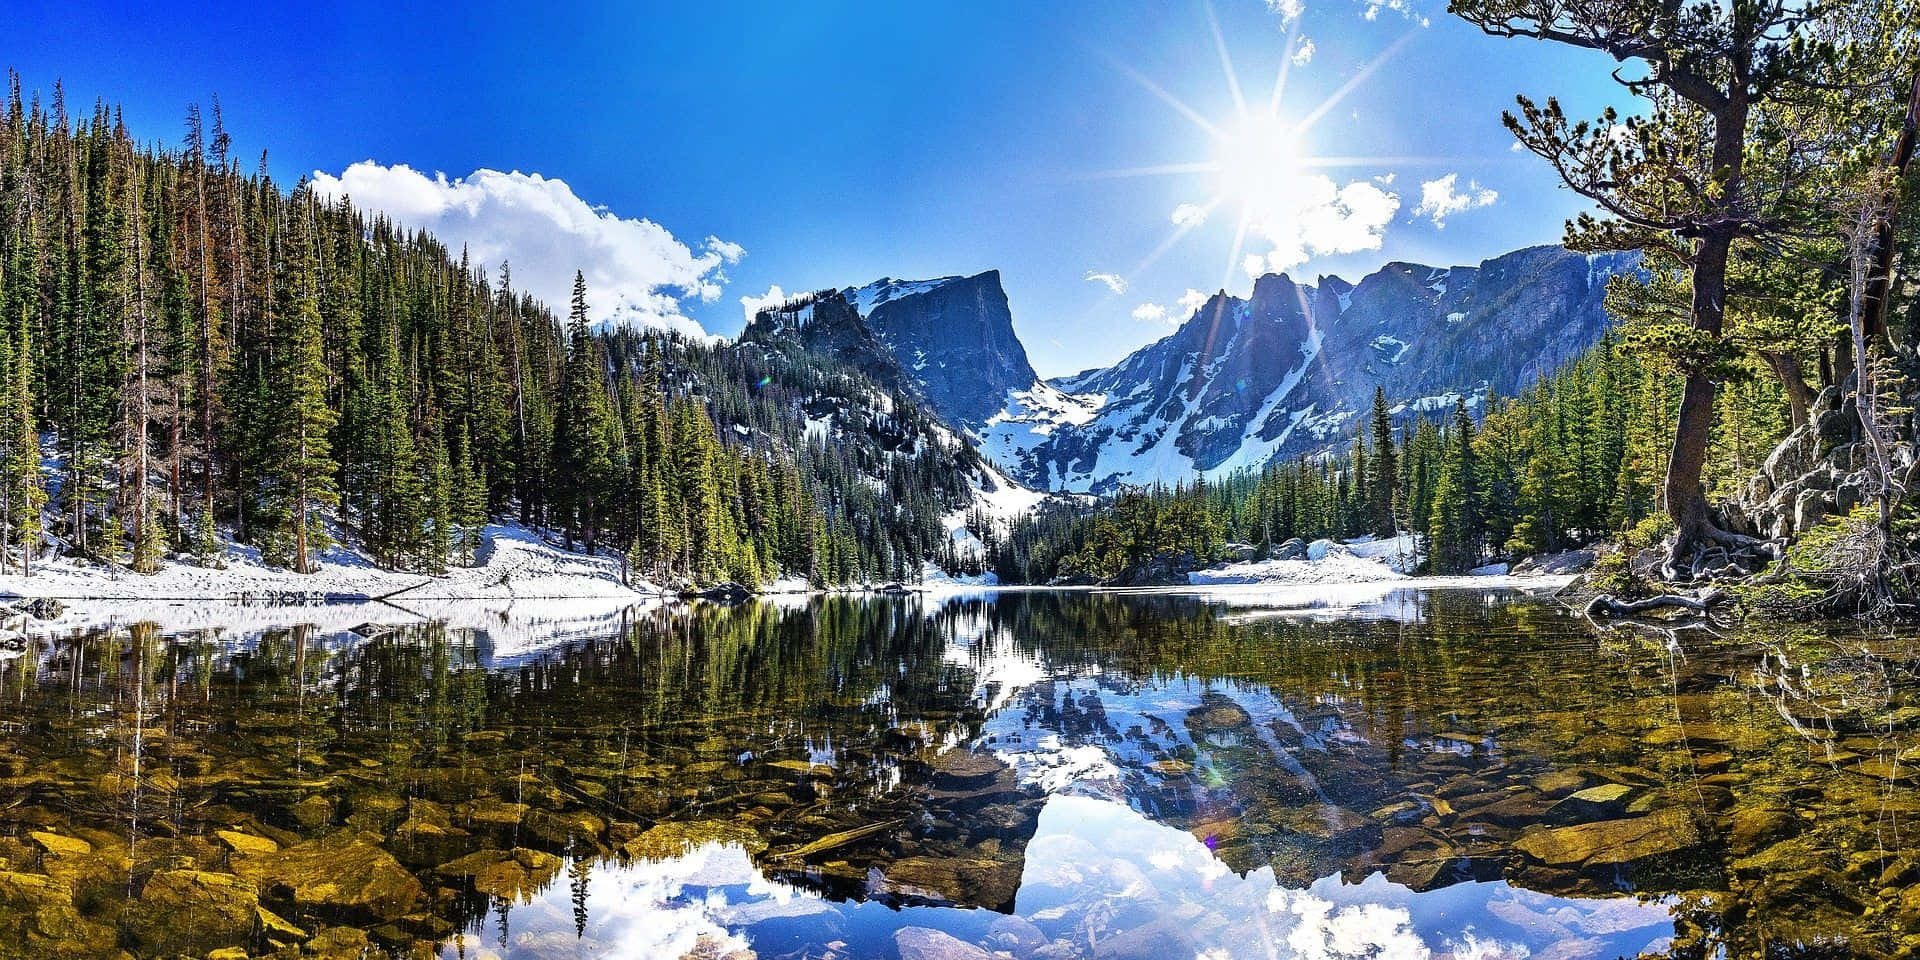 The picturesque beauty of a Colorado mountain.